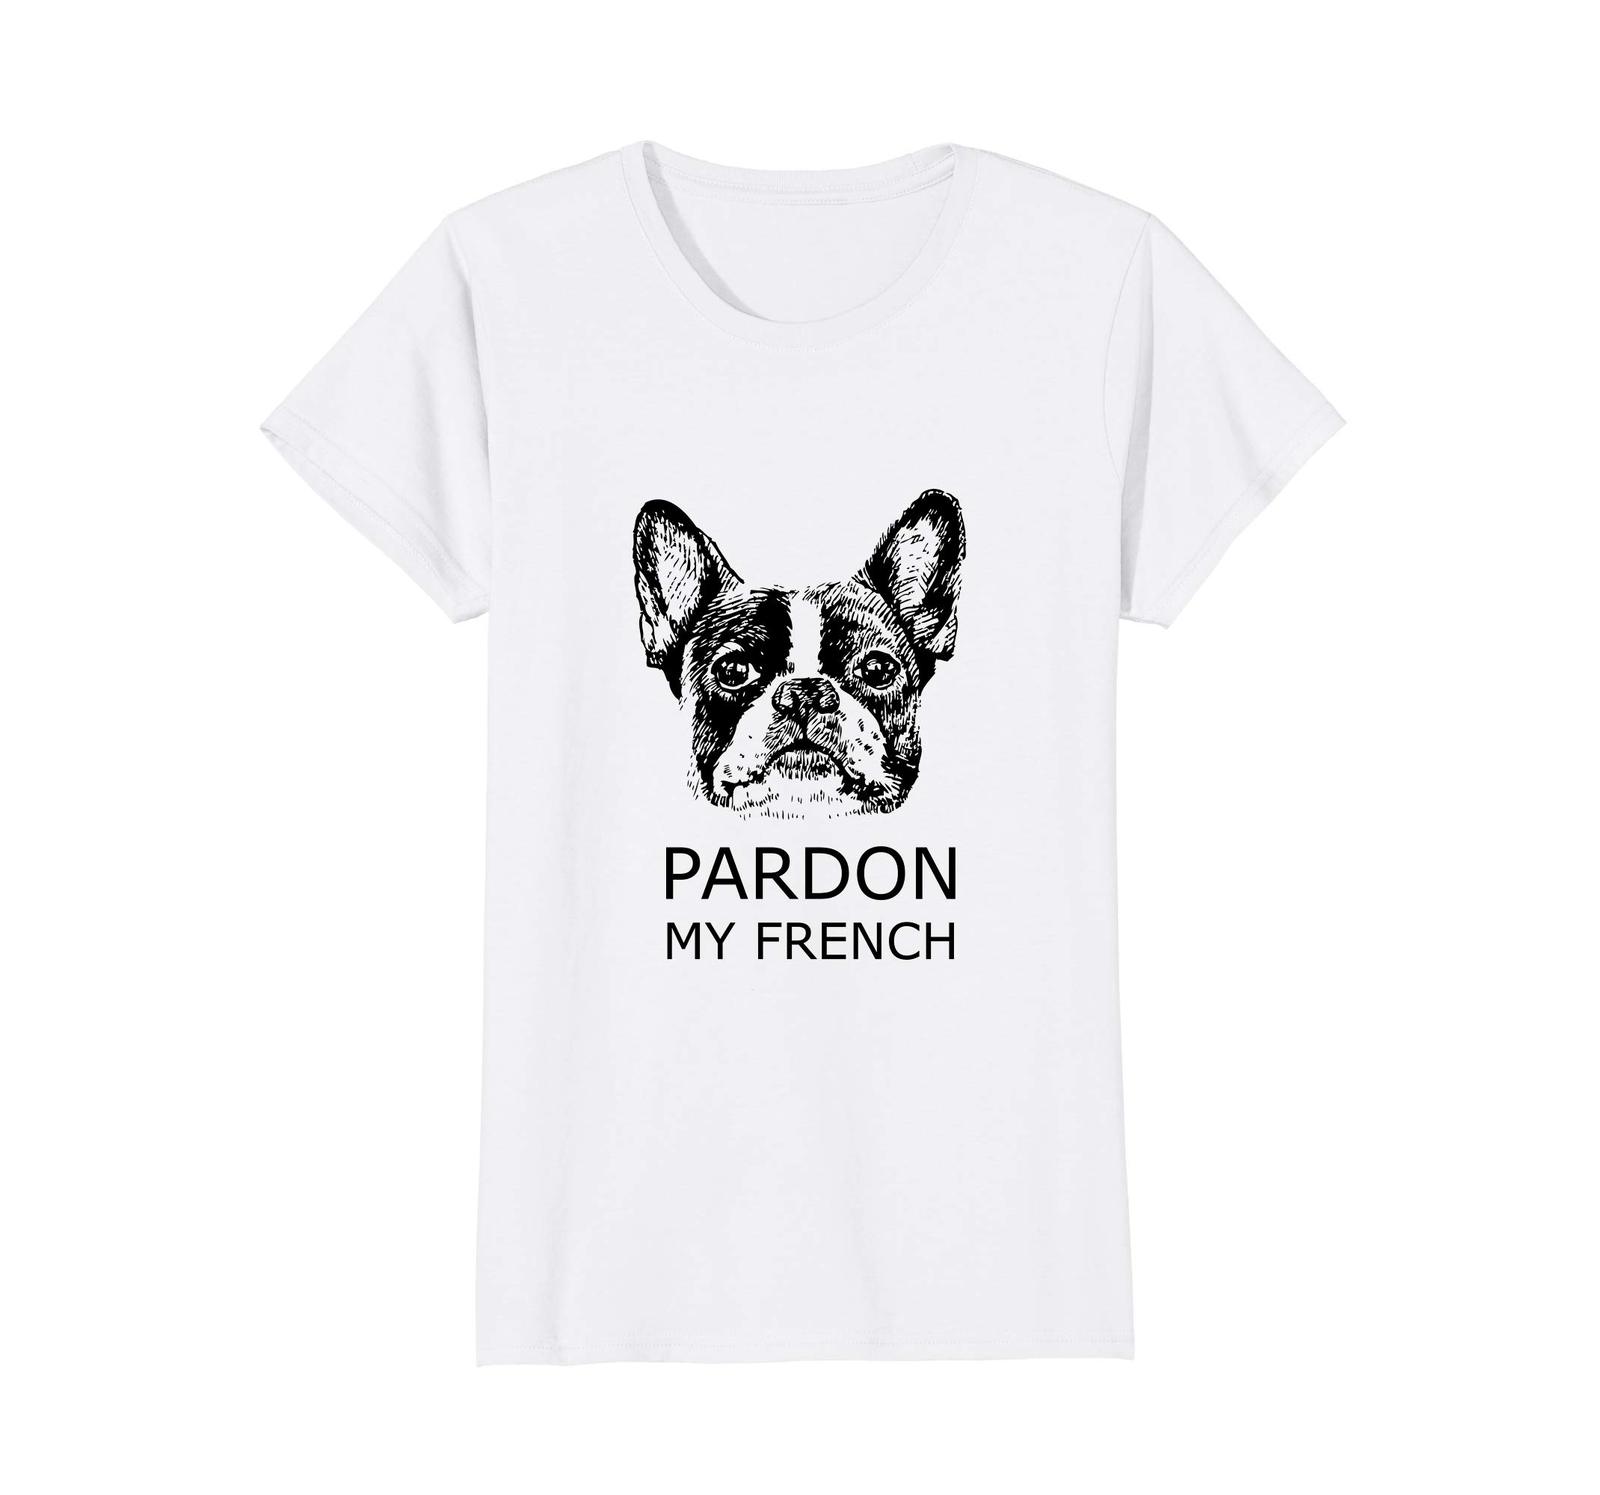 Dog Fashion - Pardon My French t shirt best gift Wowen